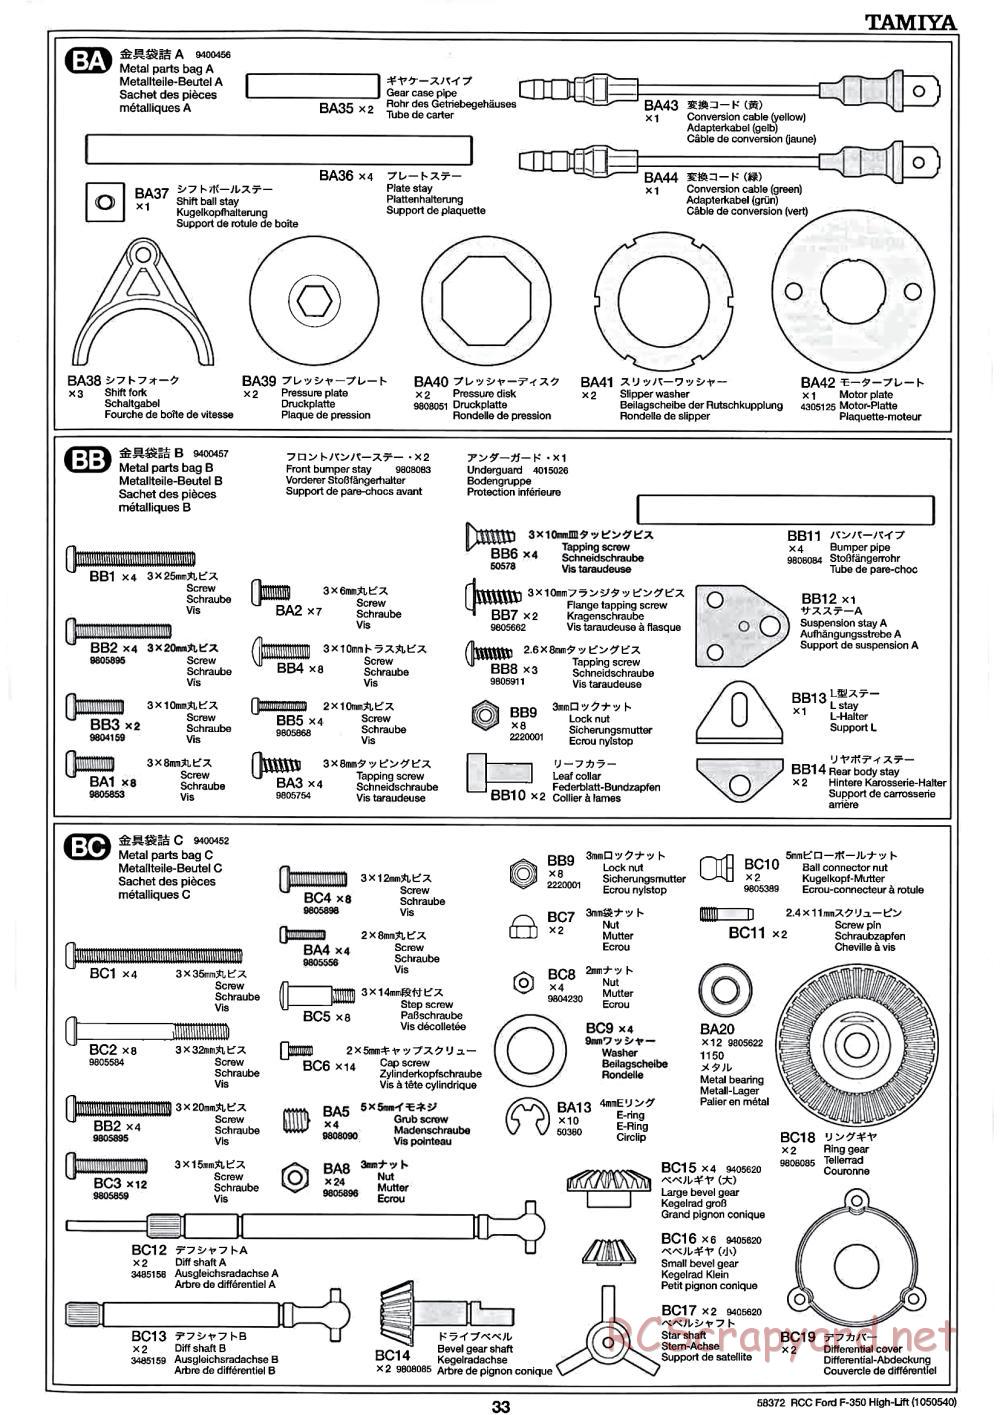 Tamiya - Ford F350 High-Lift Chassis - Manual - Page 33